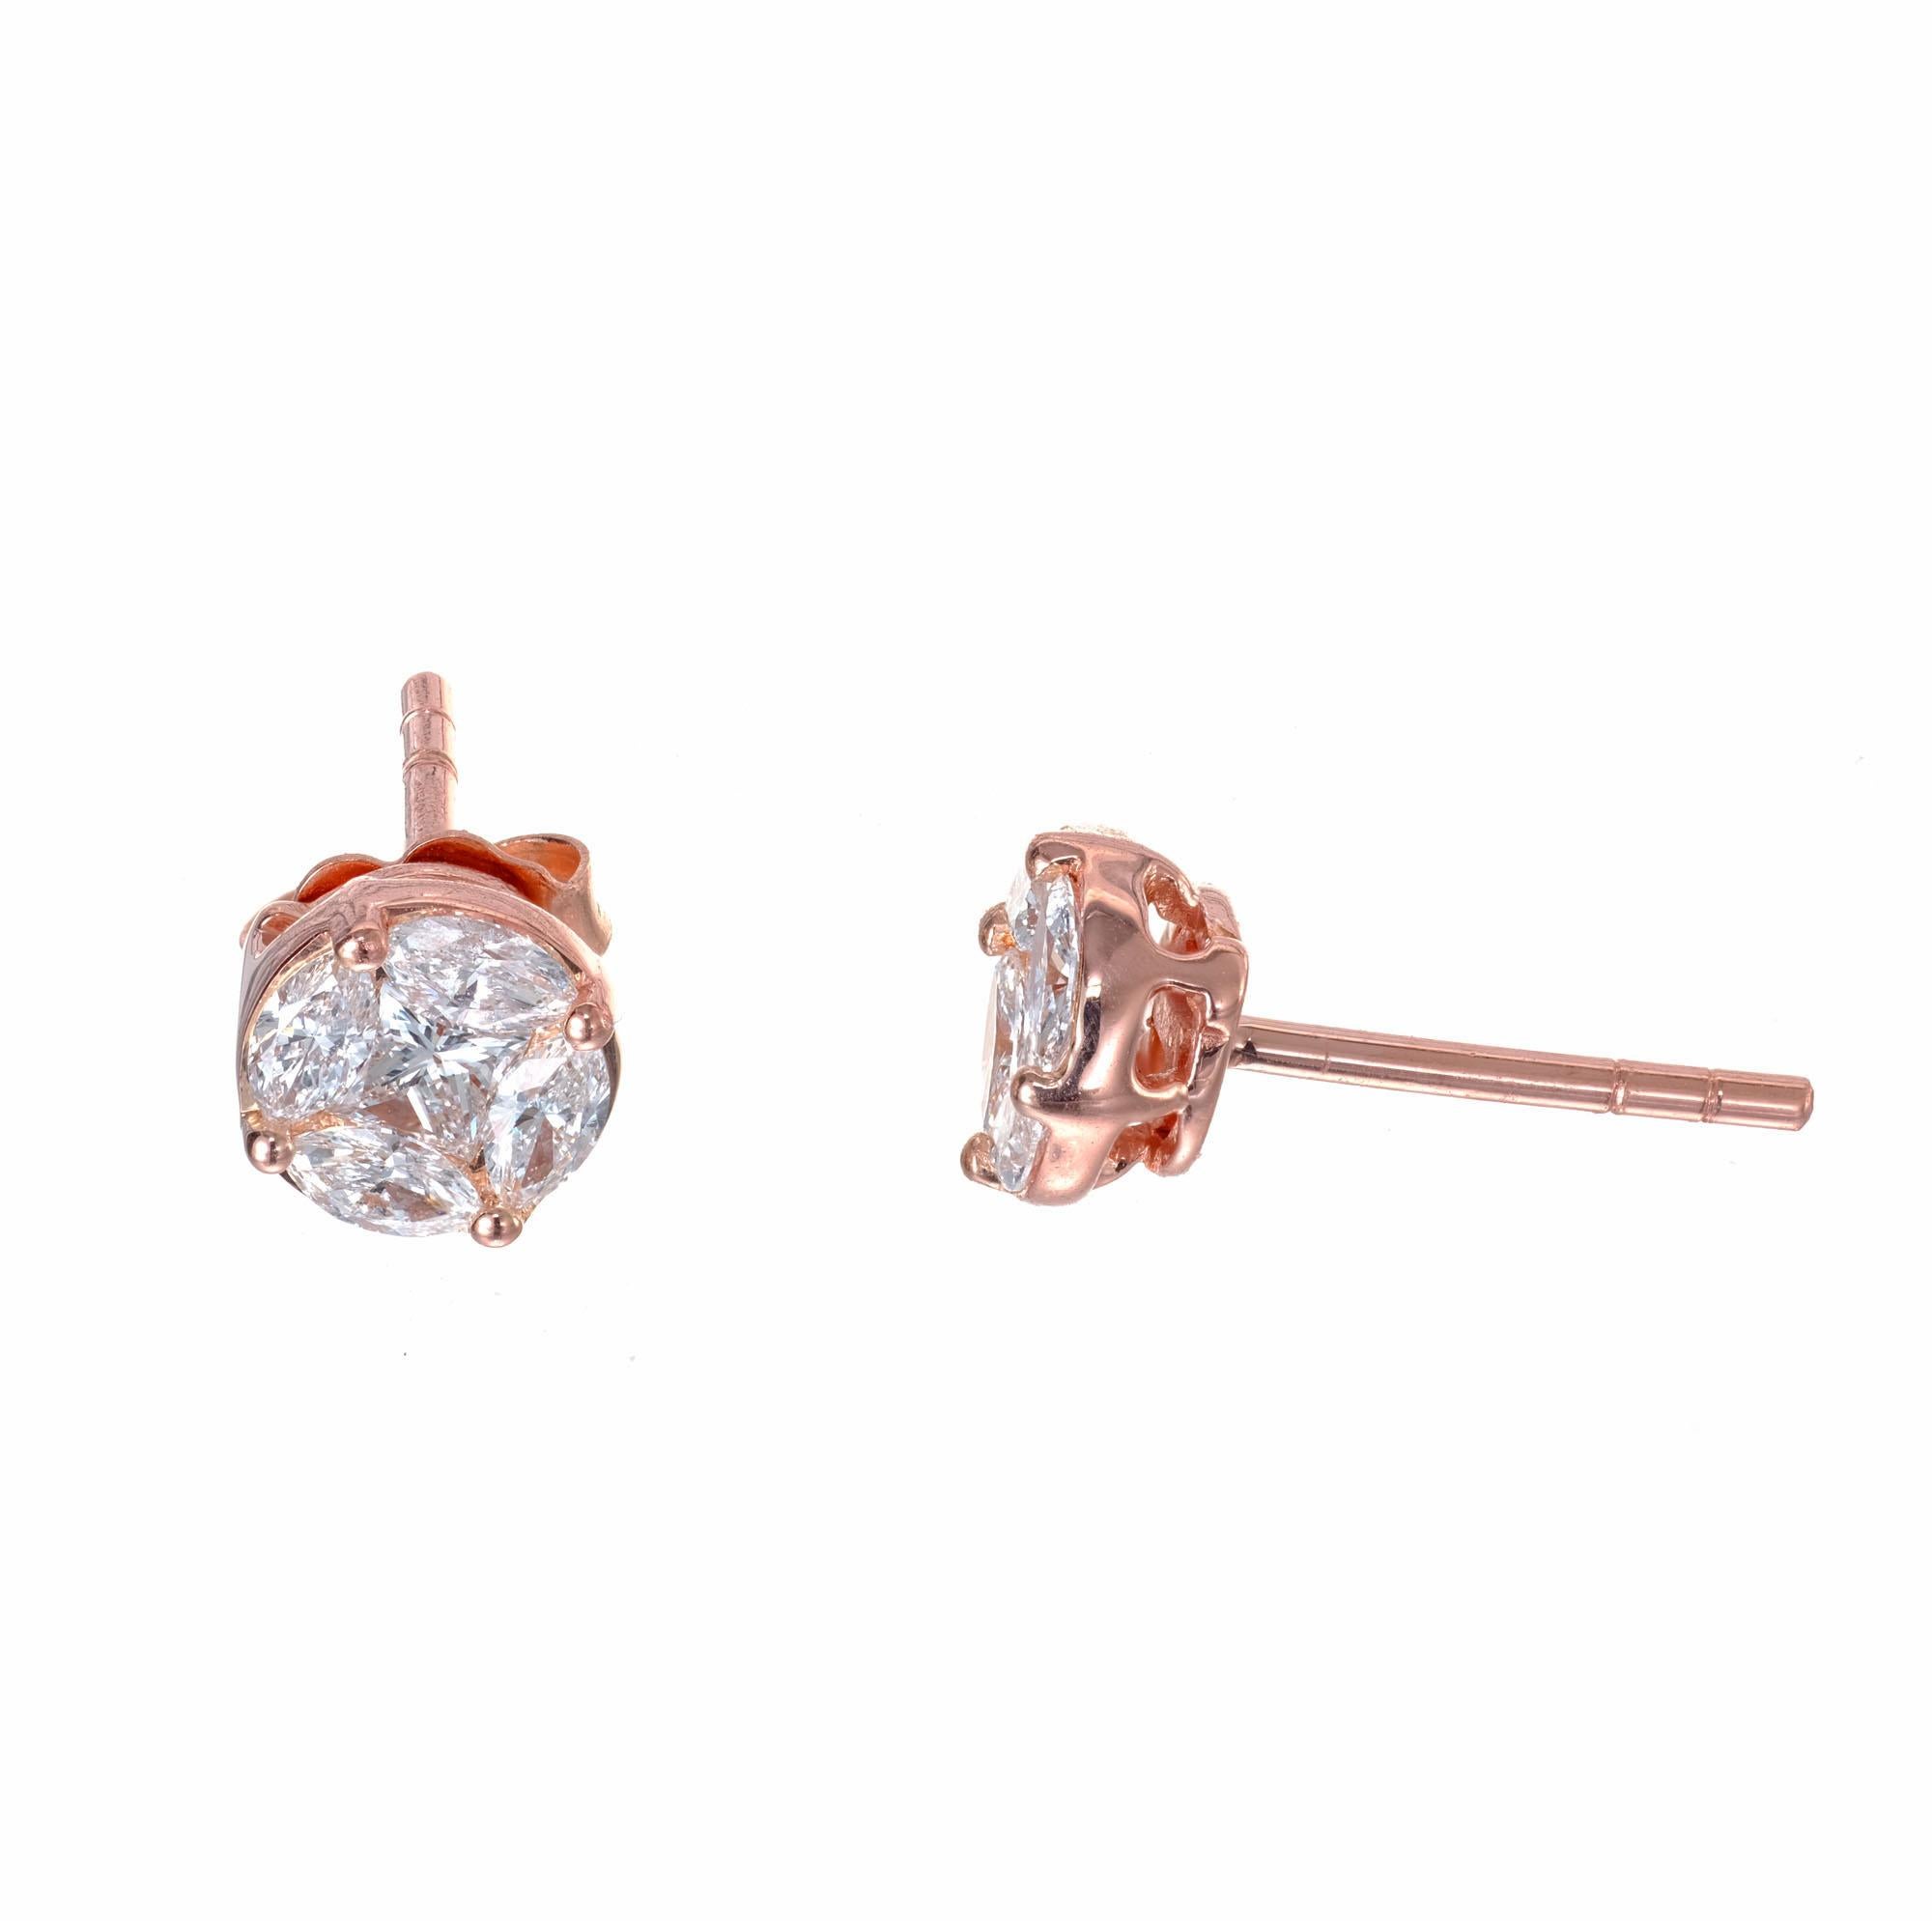 Marquise Cut 1.04 Carat Diamond Rose Gold Stud Earrings